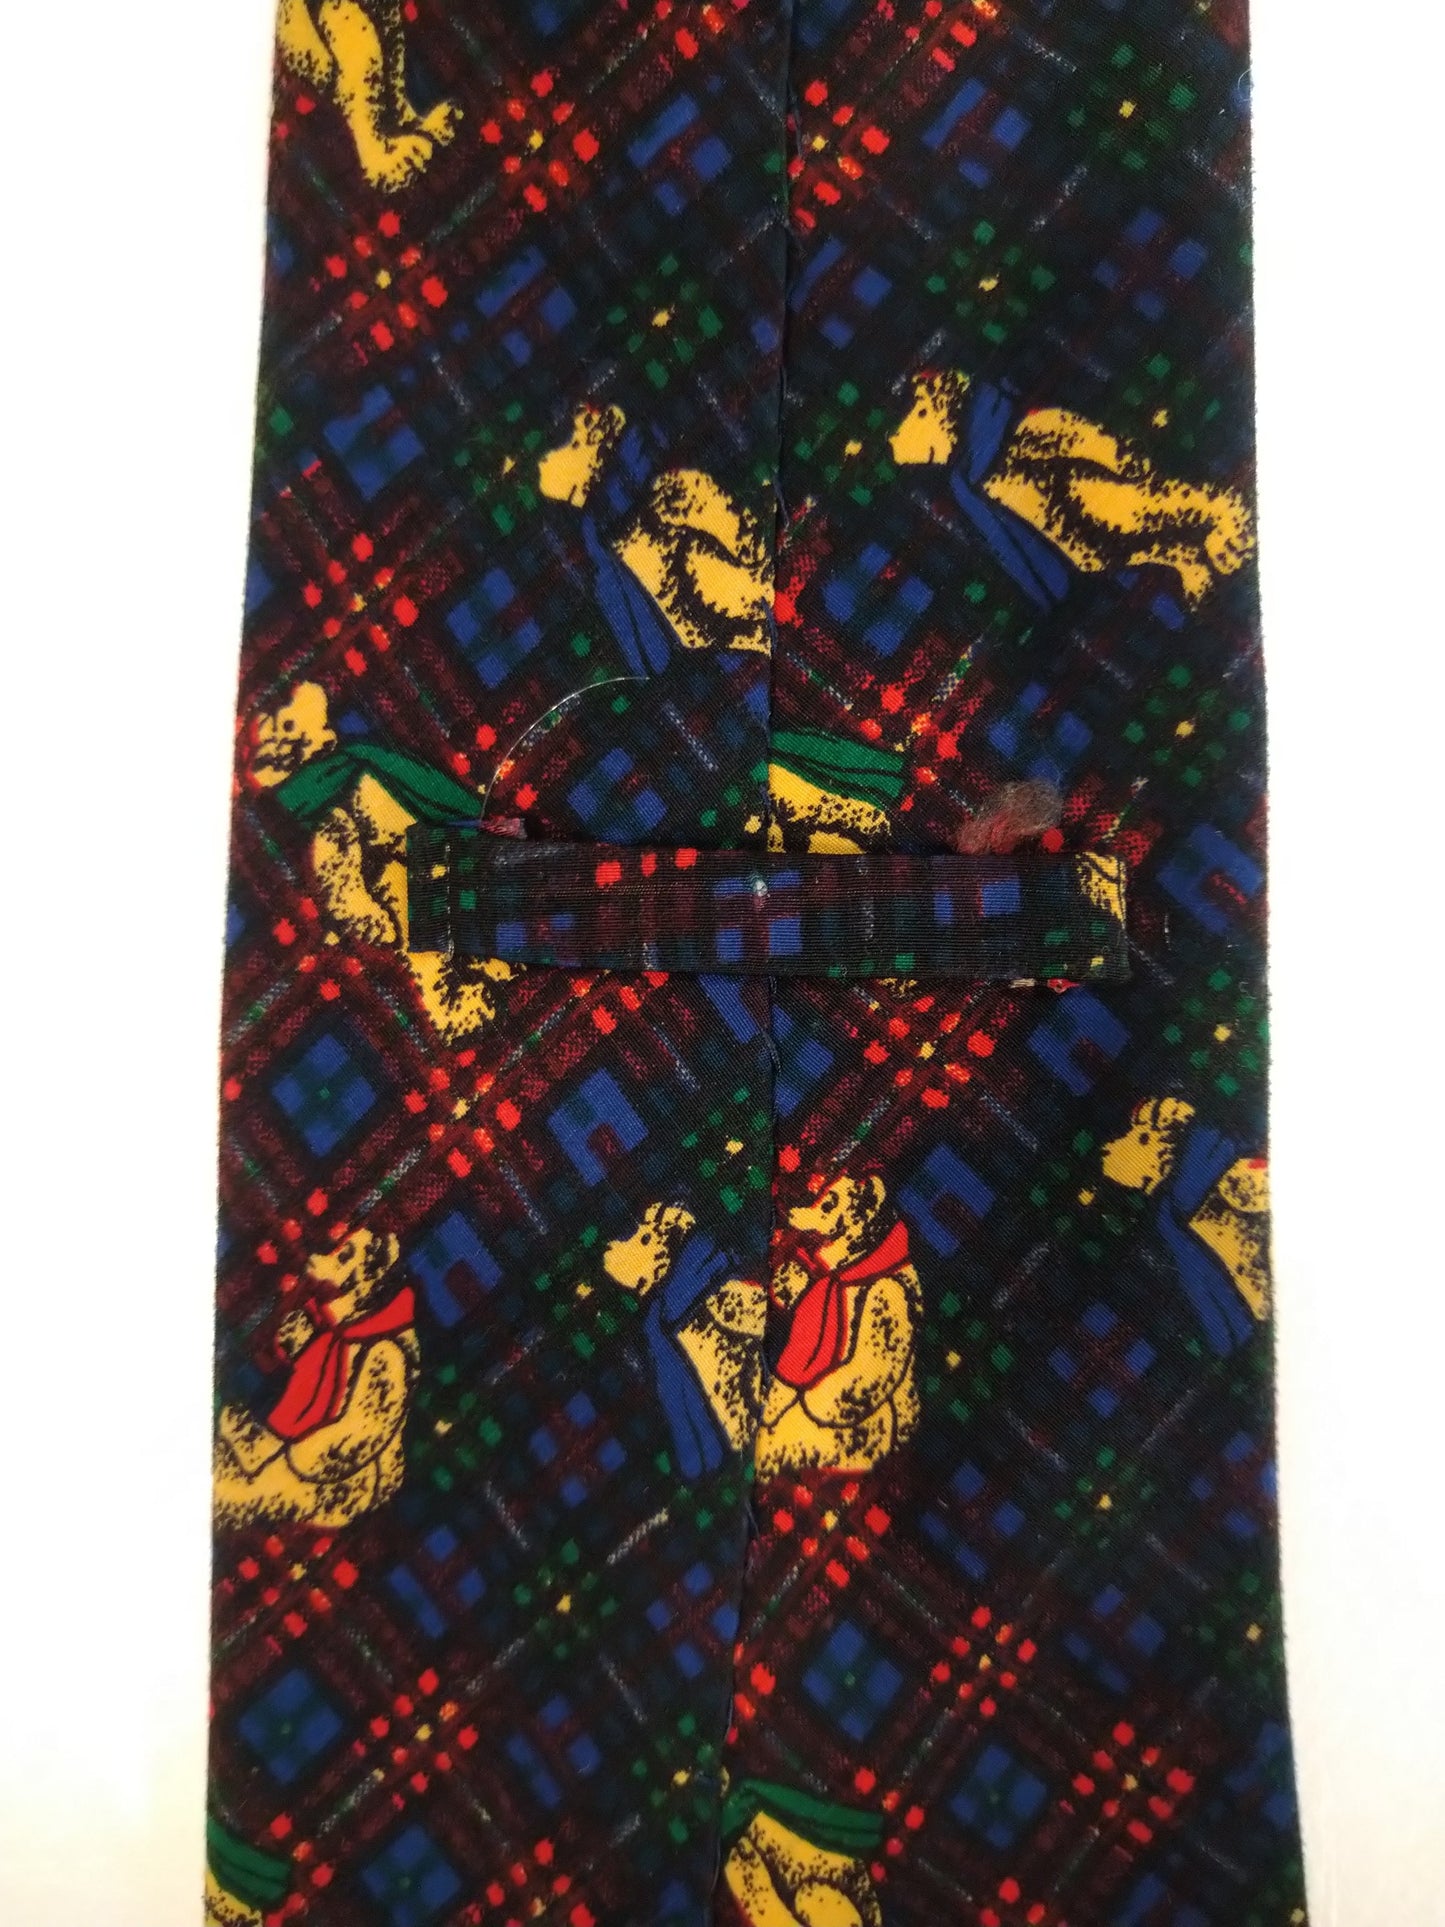 Vintage polyester tie. Beautiful multicolored bear motif.